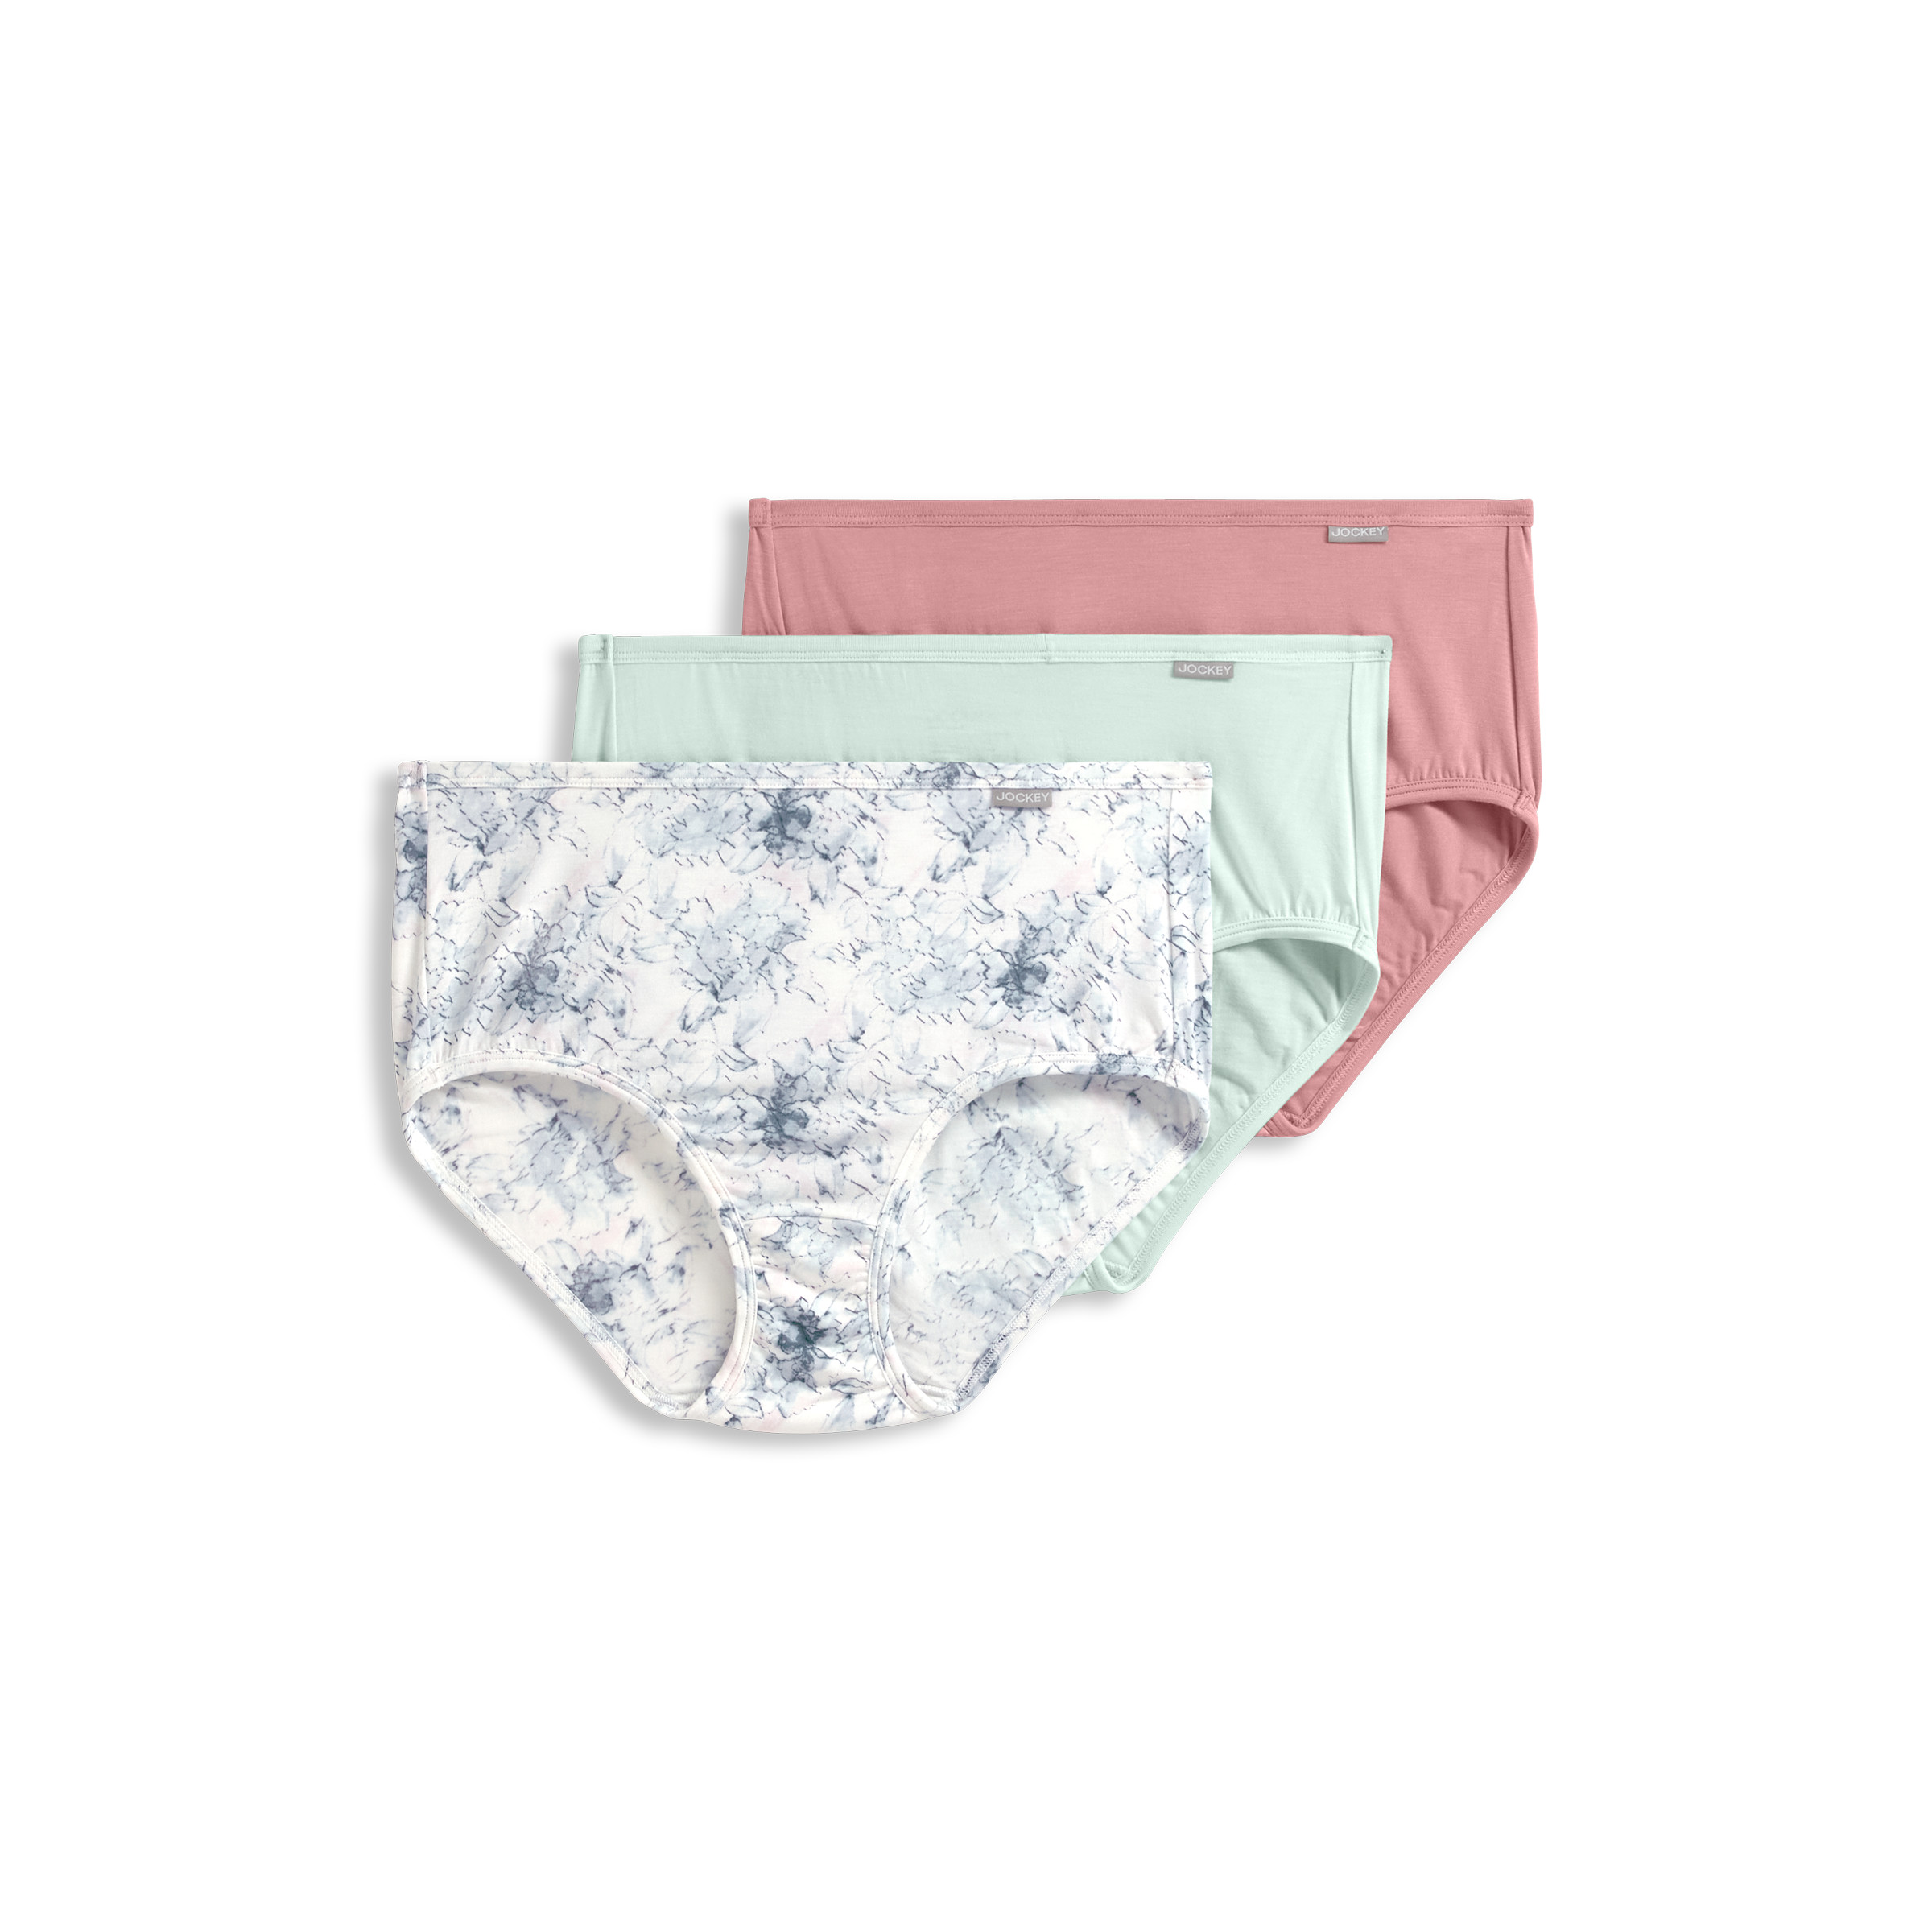 Jockey Women's 3 Pack Basic Briefs Underwear - Extended Size